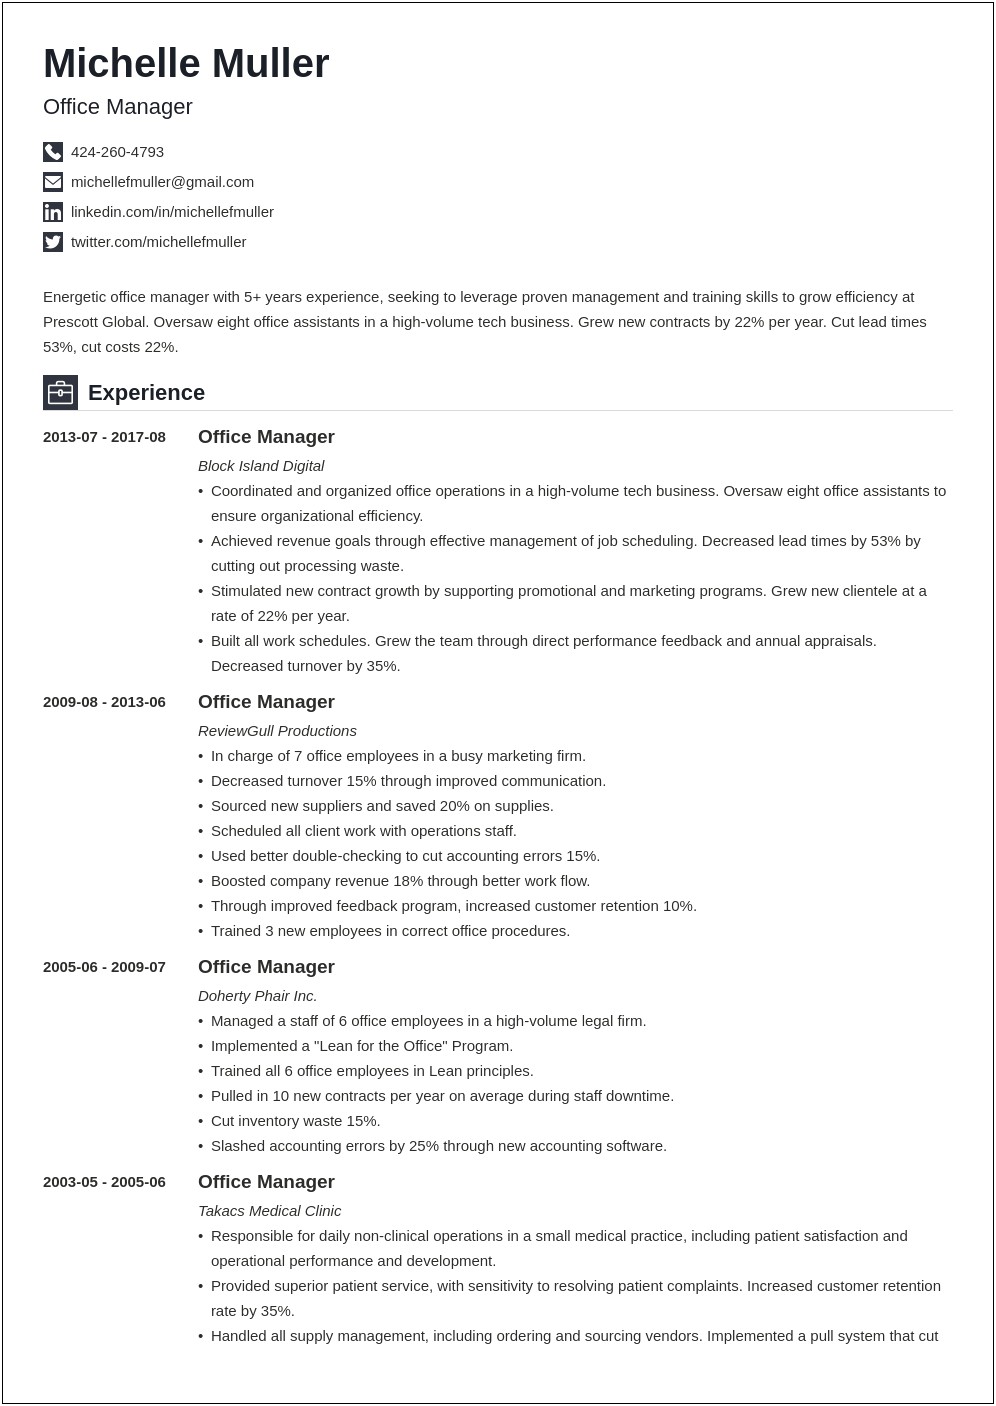 Resume 2 Jobs Same Company